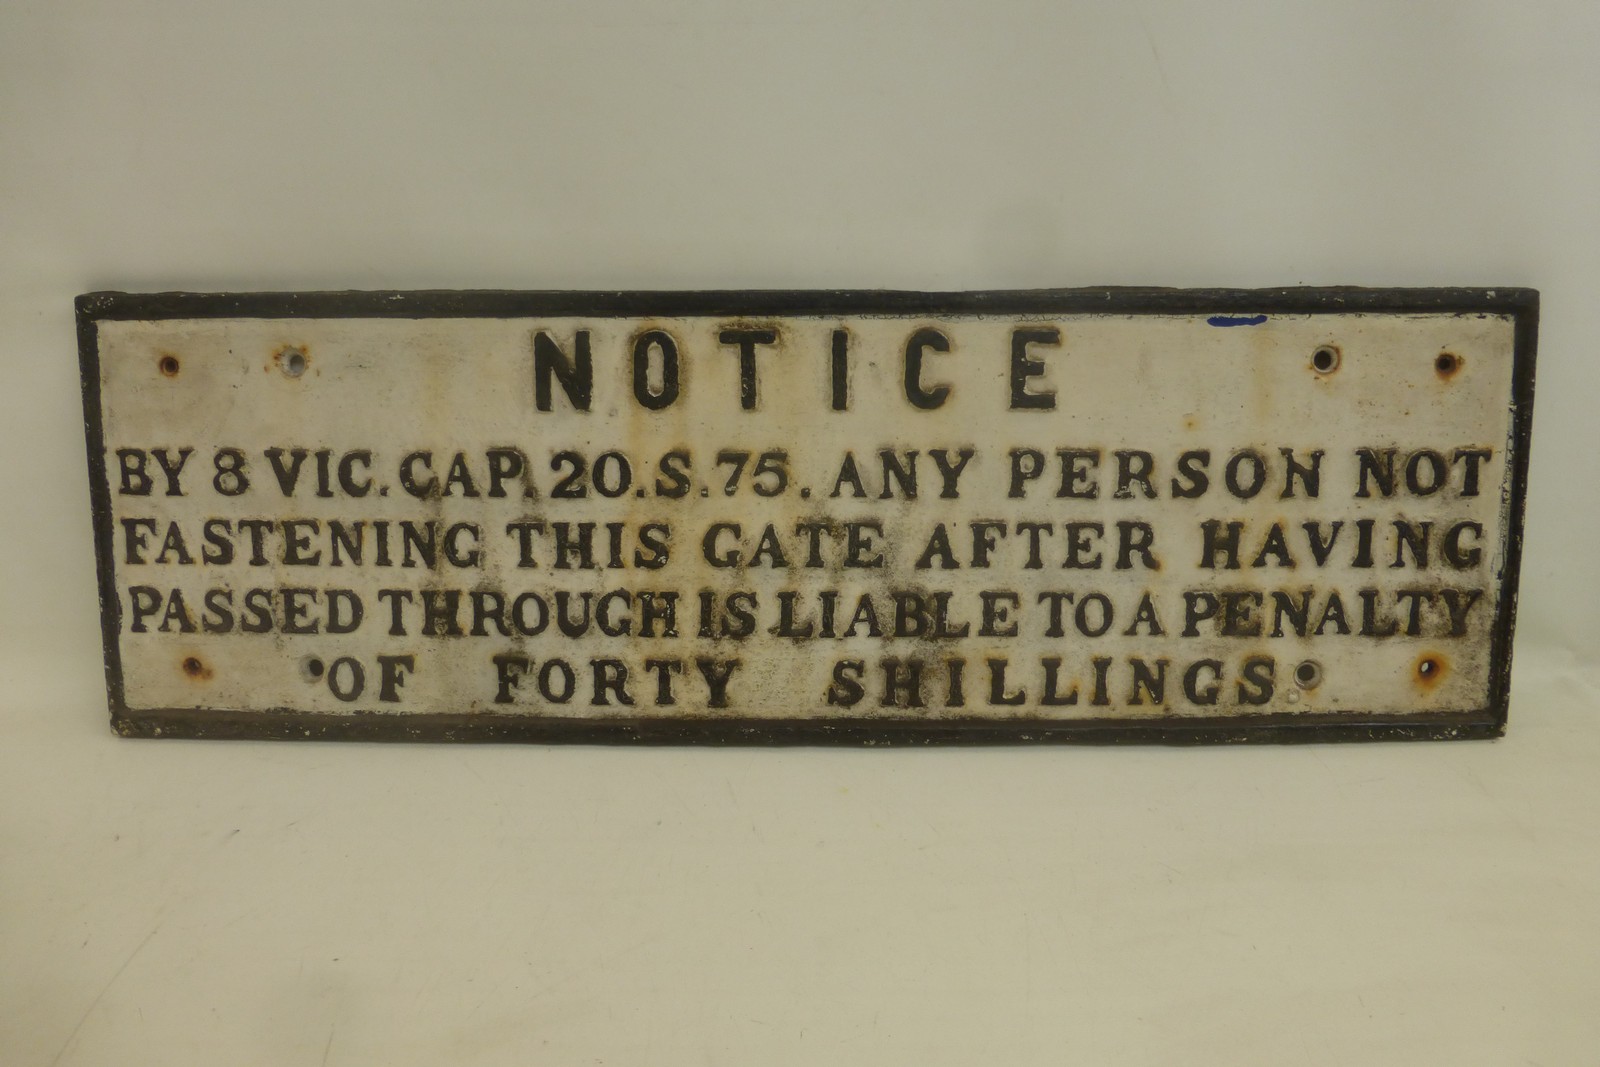 An original cast iron railway sign- "Notice by 8 Vic.Cap.20.S.75", 31 x 9 3/4".